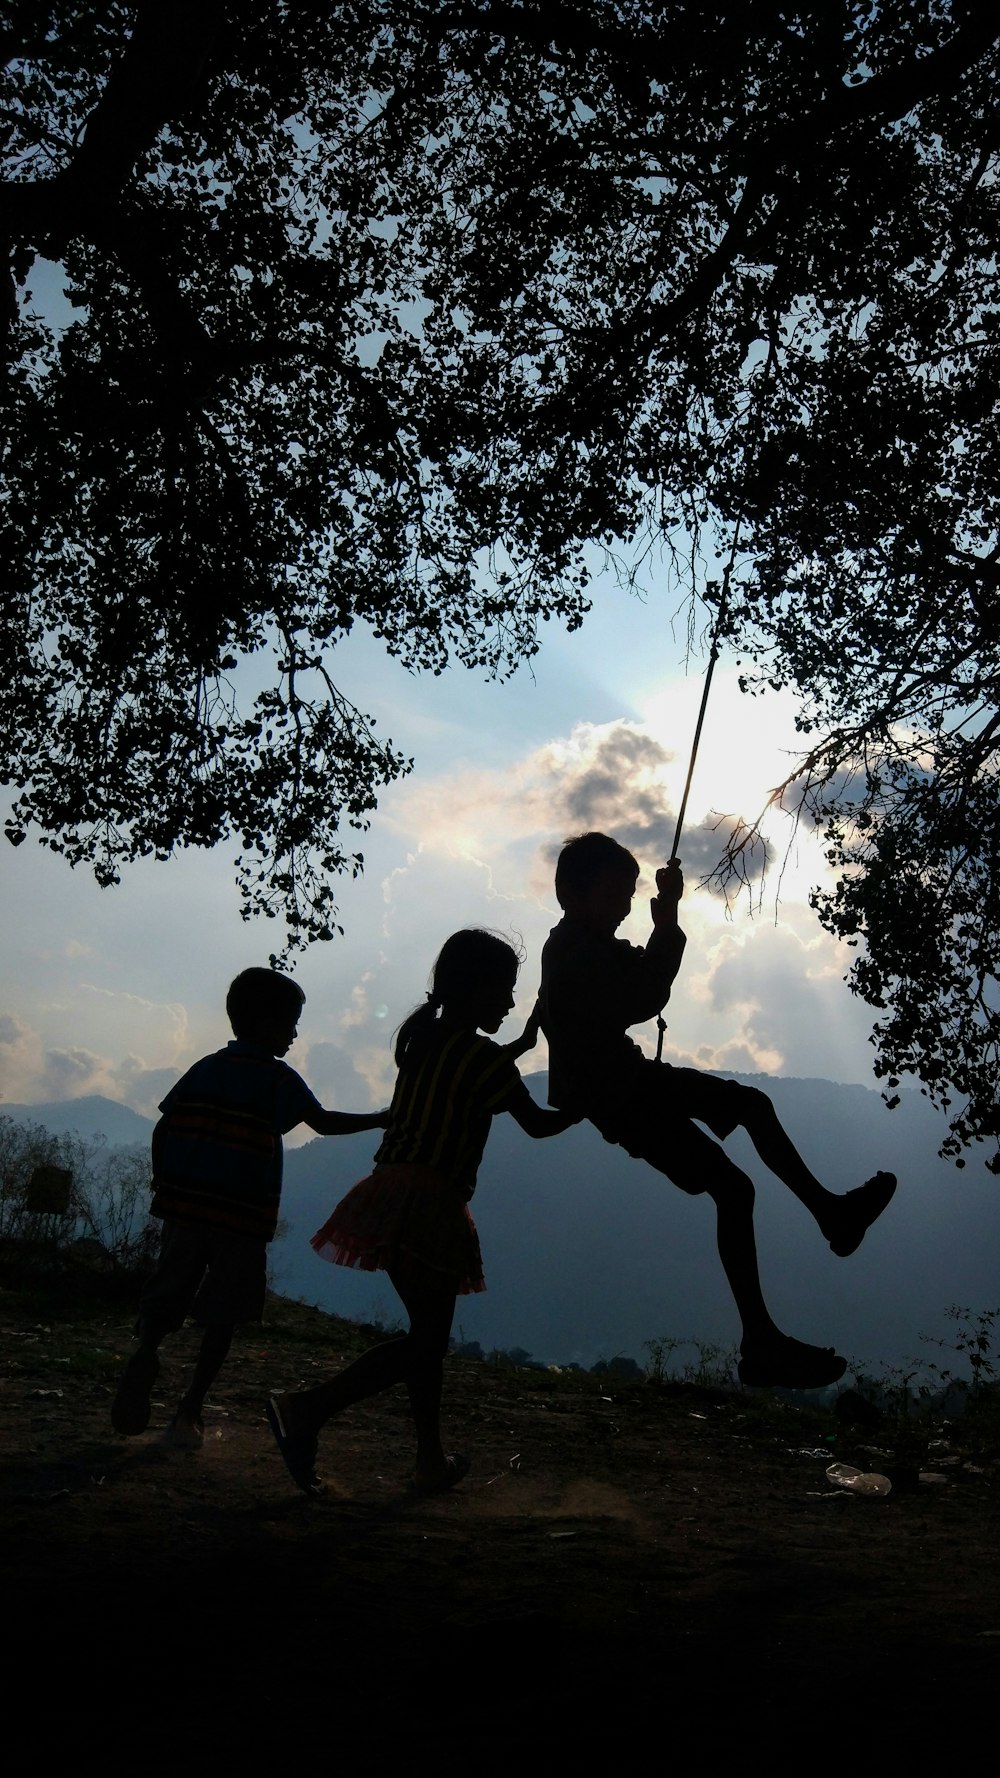 silhouette of 3 children sitting on swing under tree during daytime